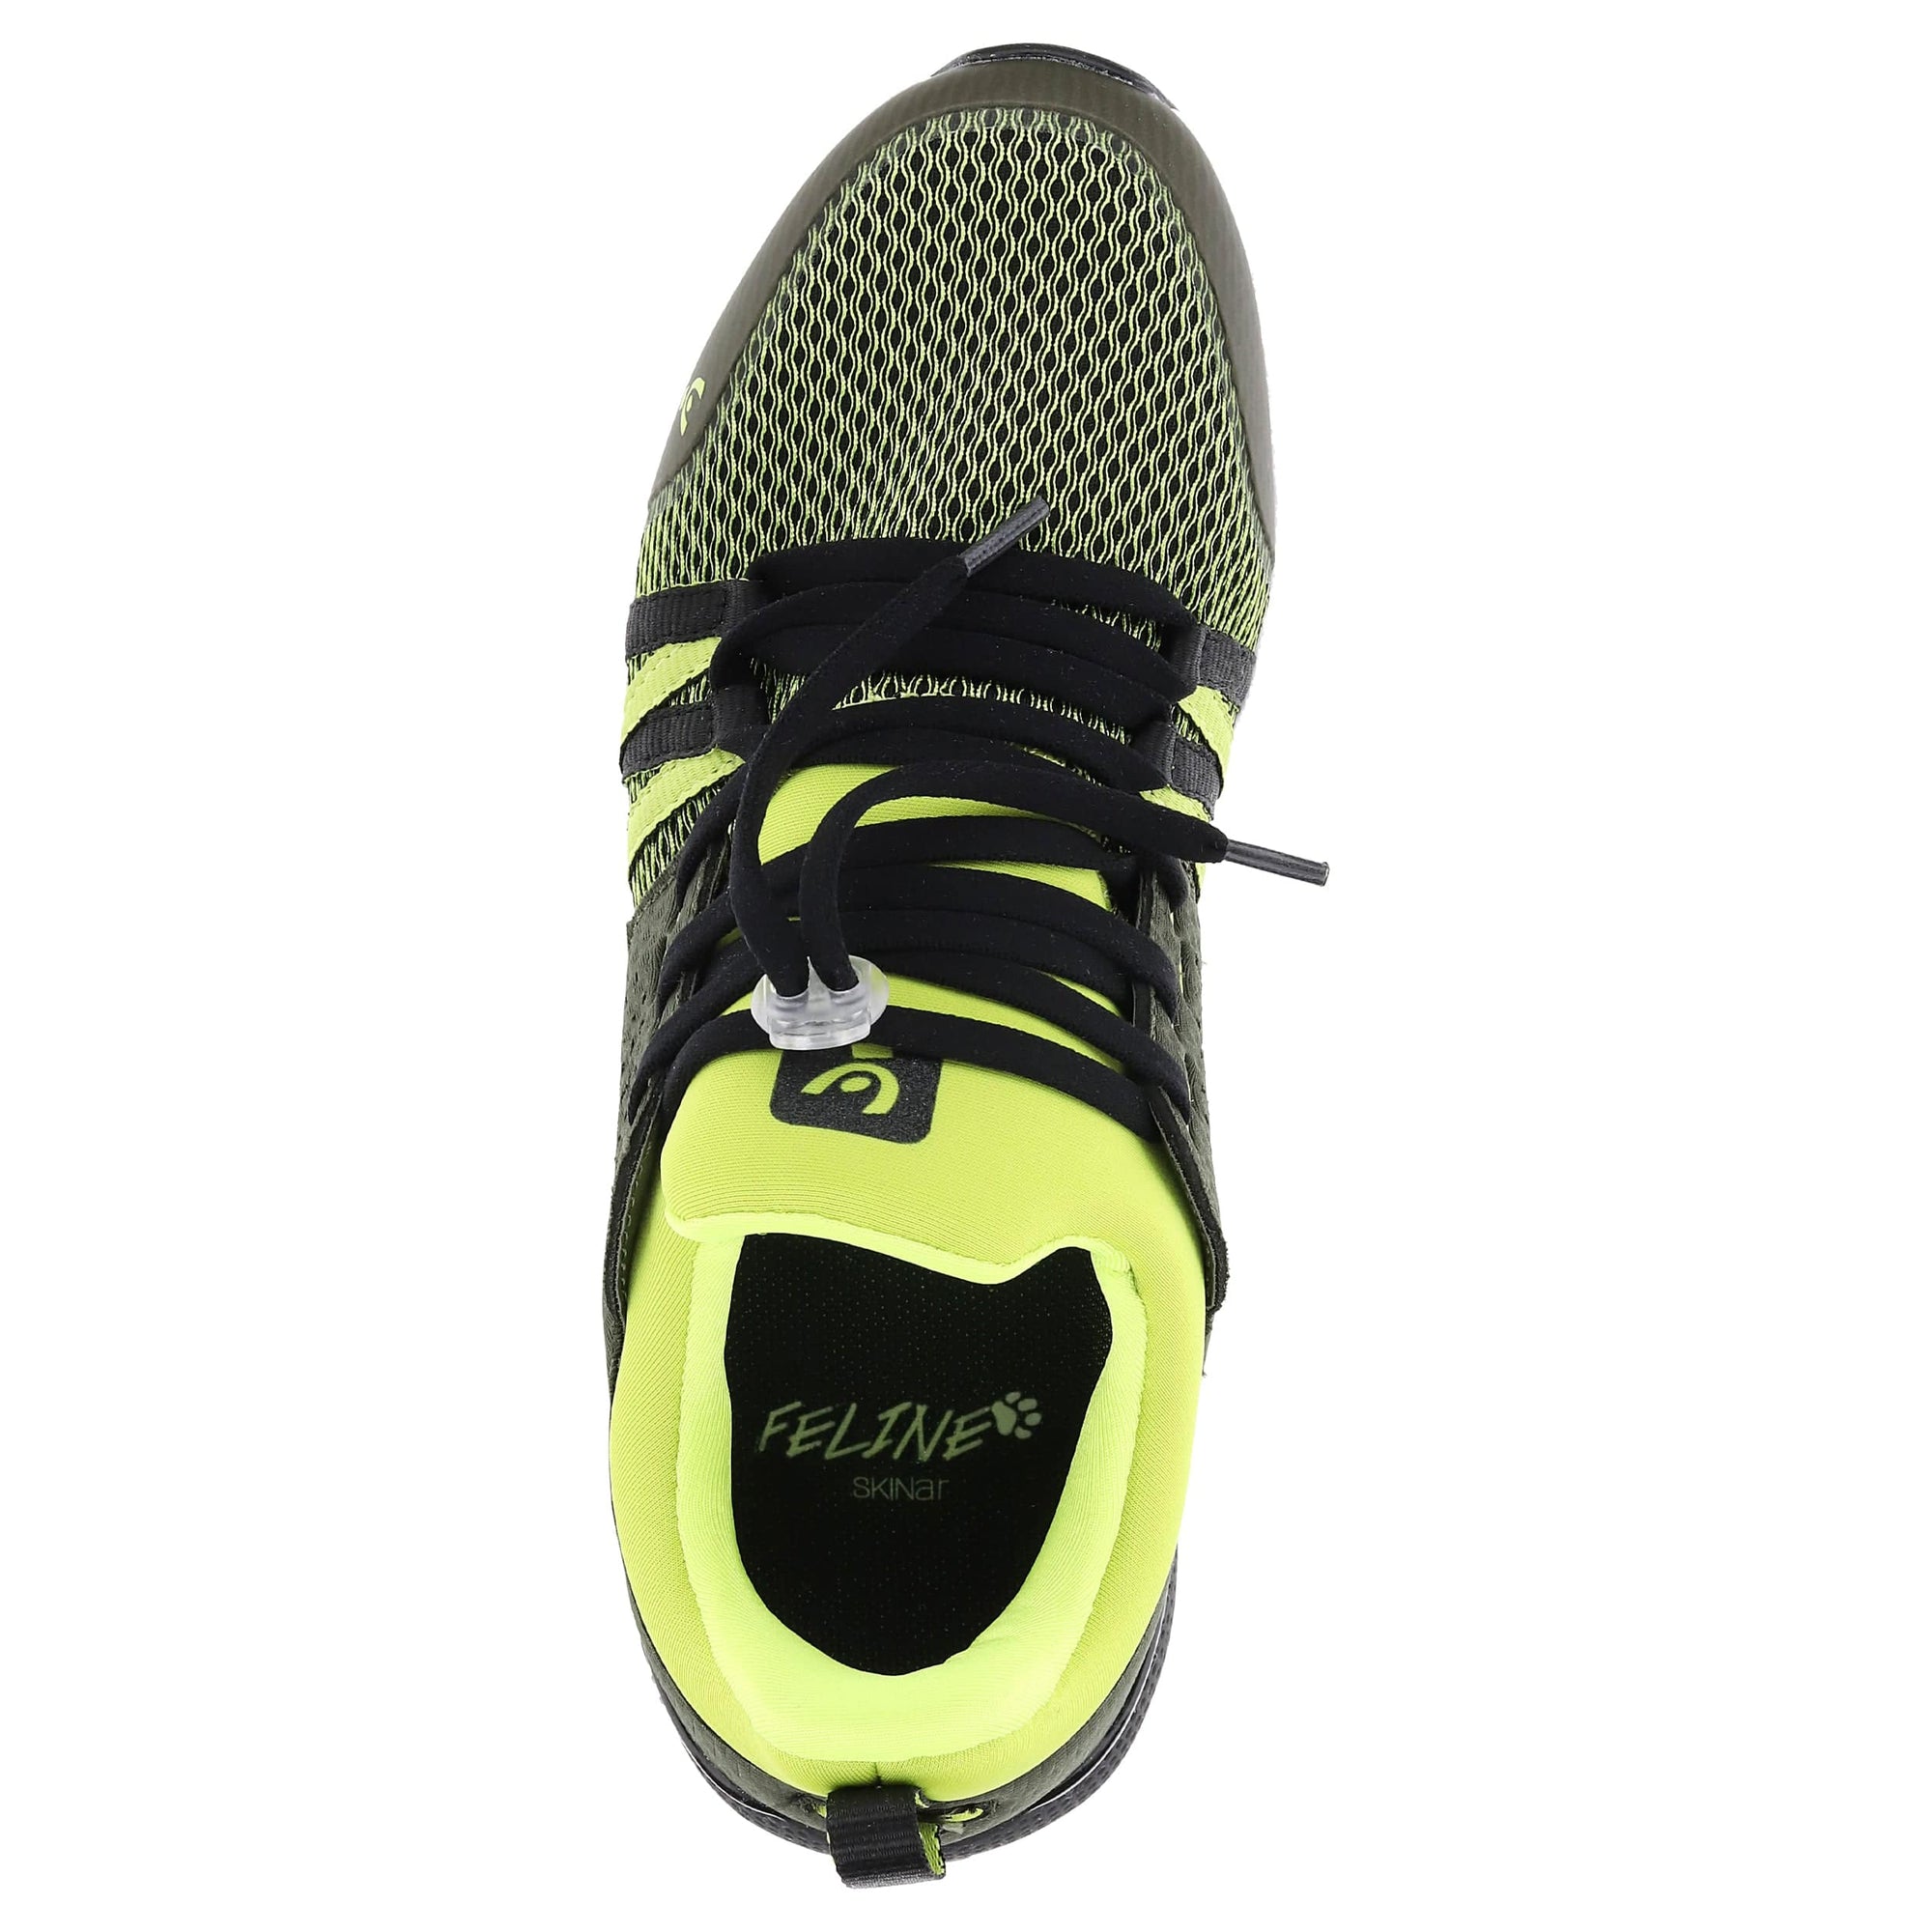 Neon Feline Skinair Active Sport Shoes - Lime 3